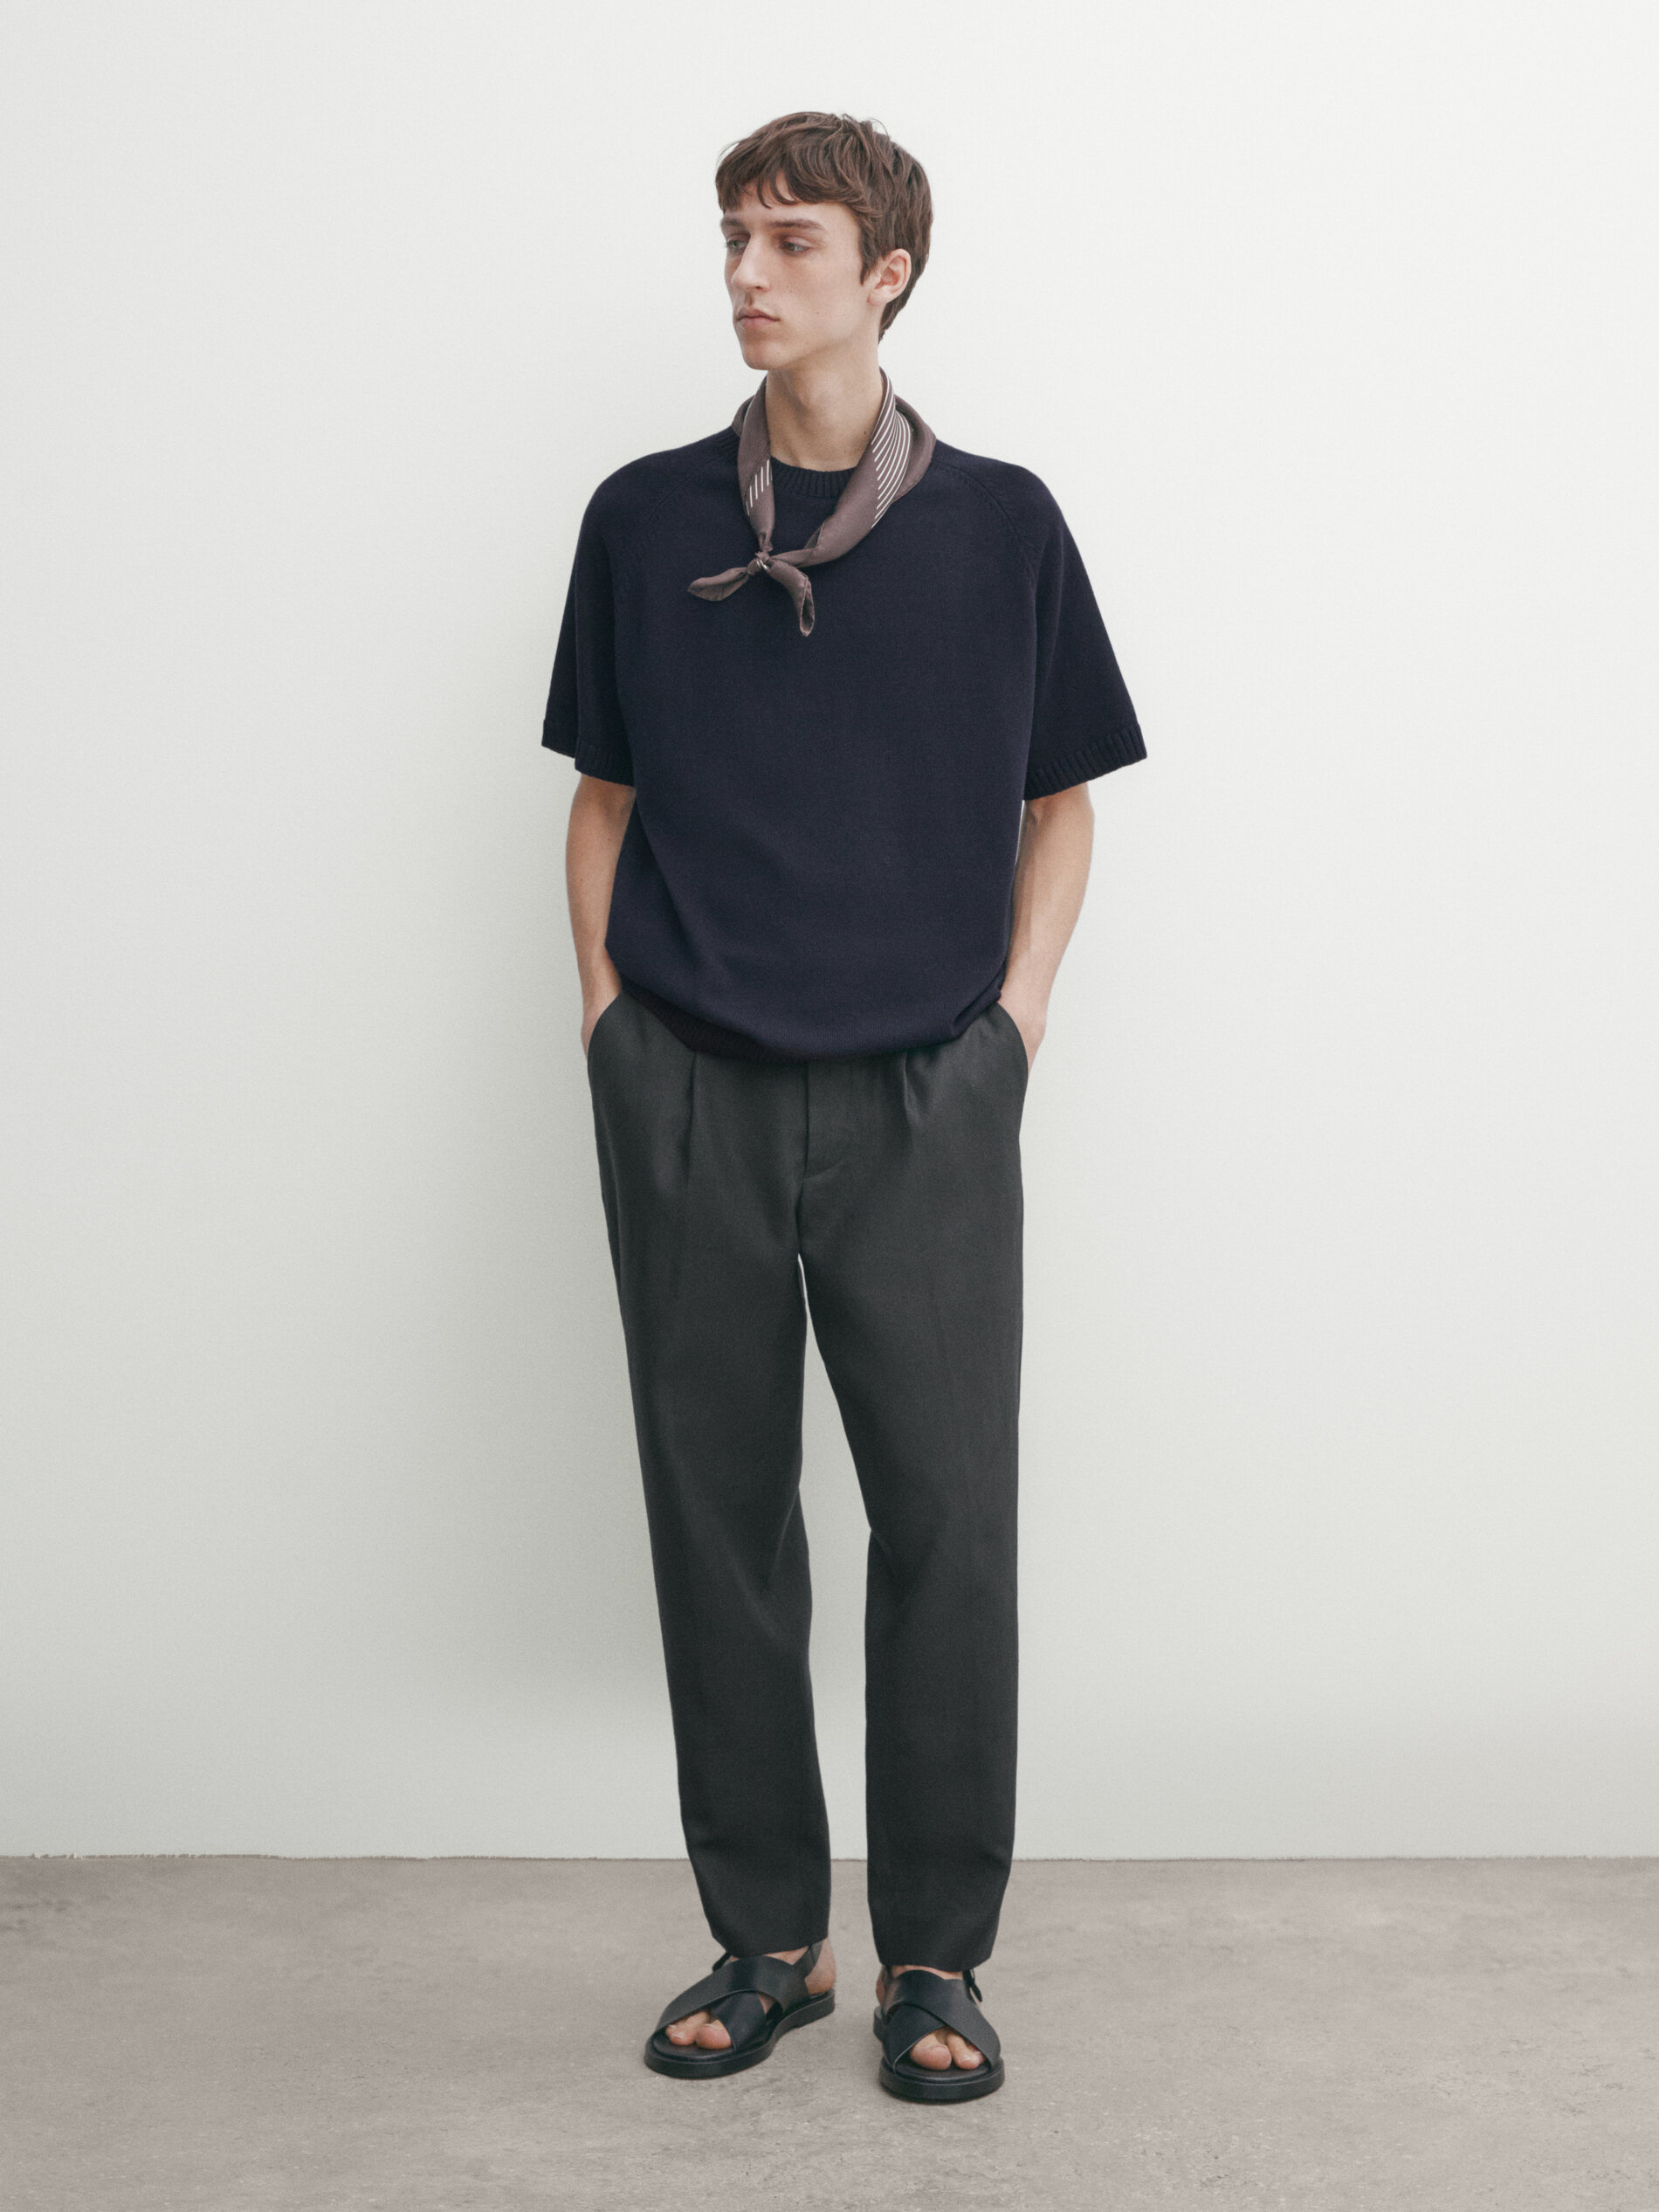 Massimo Dutti Short Sleeve Knit Sweater With Cotton In Marineblau